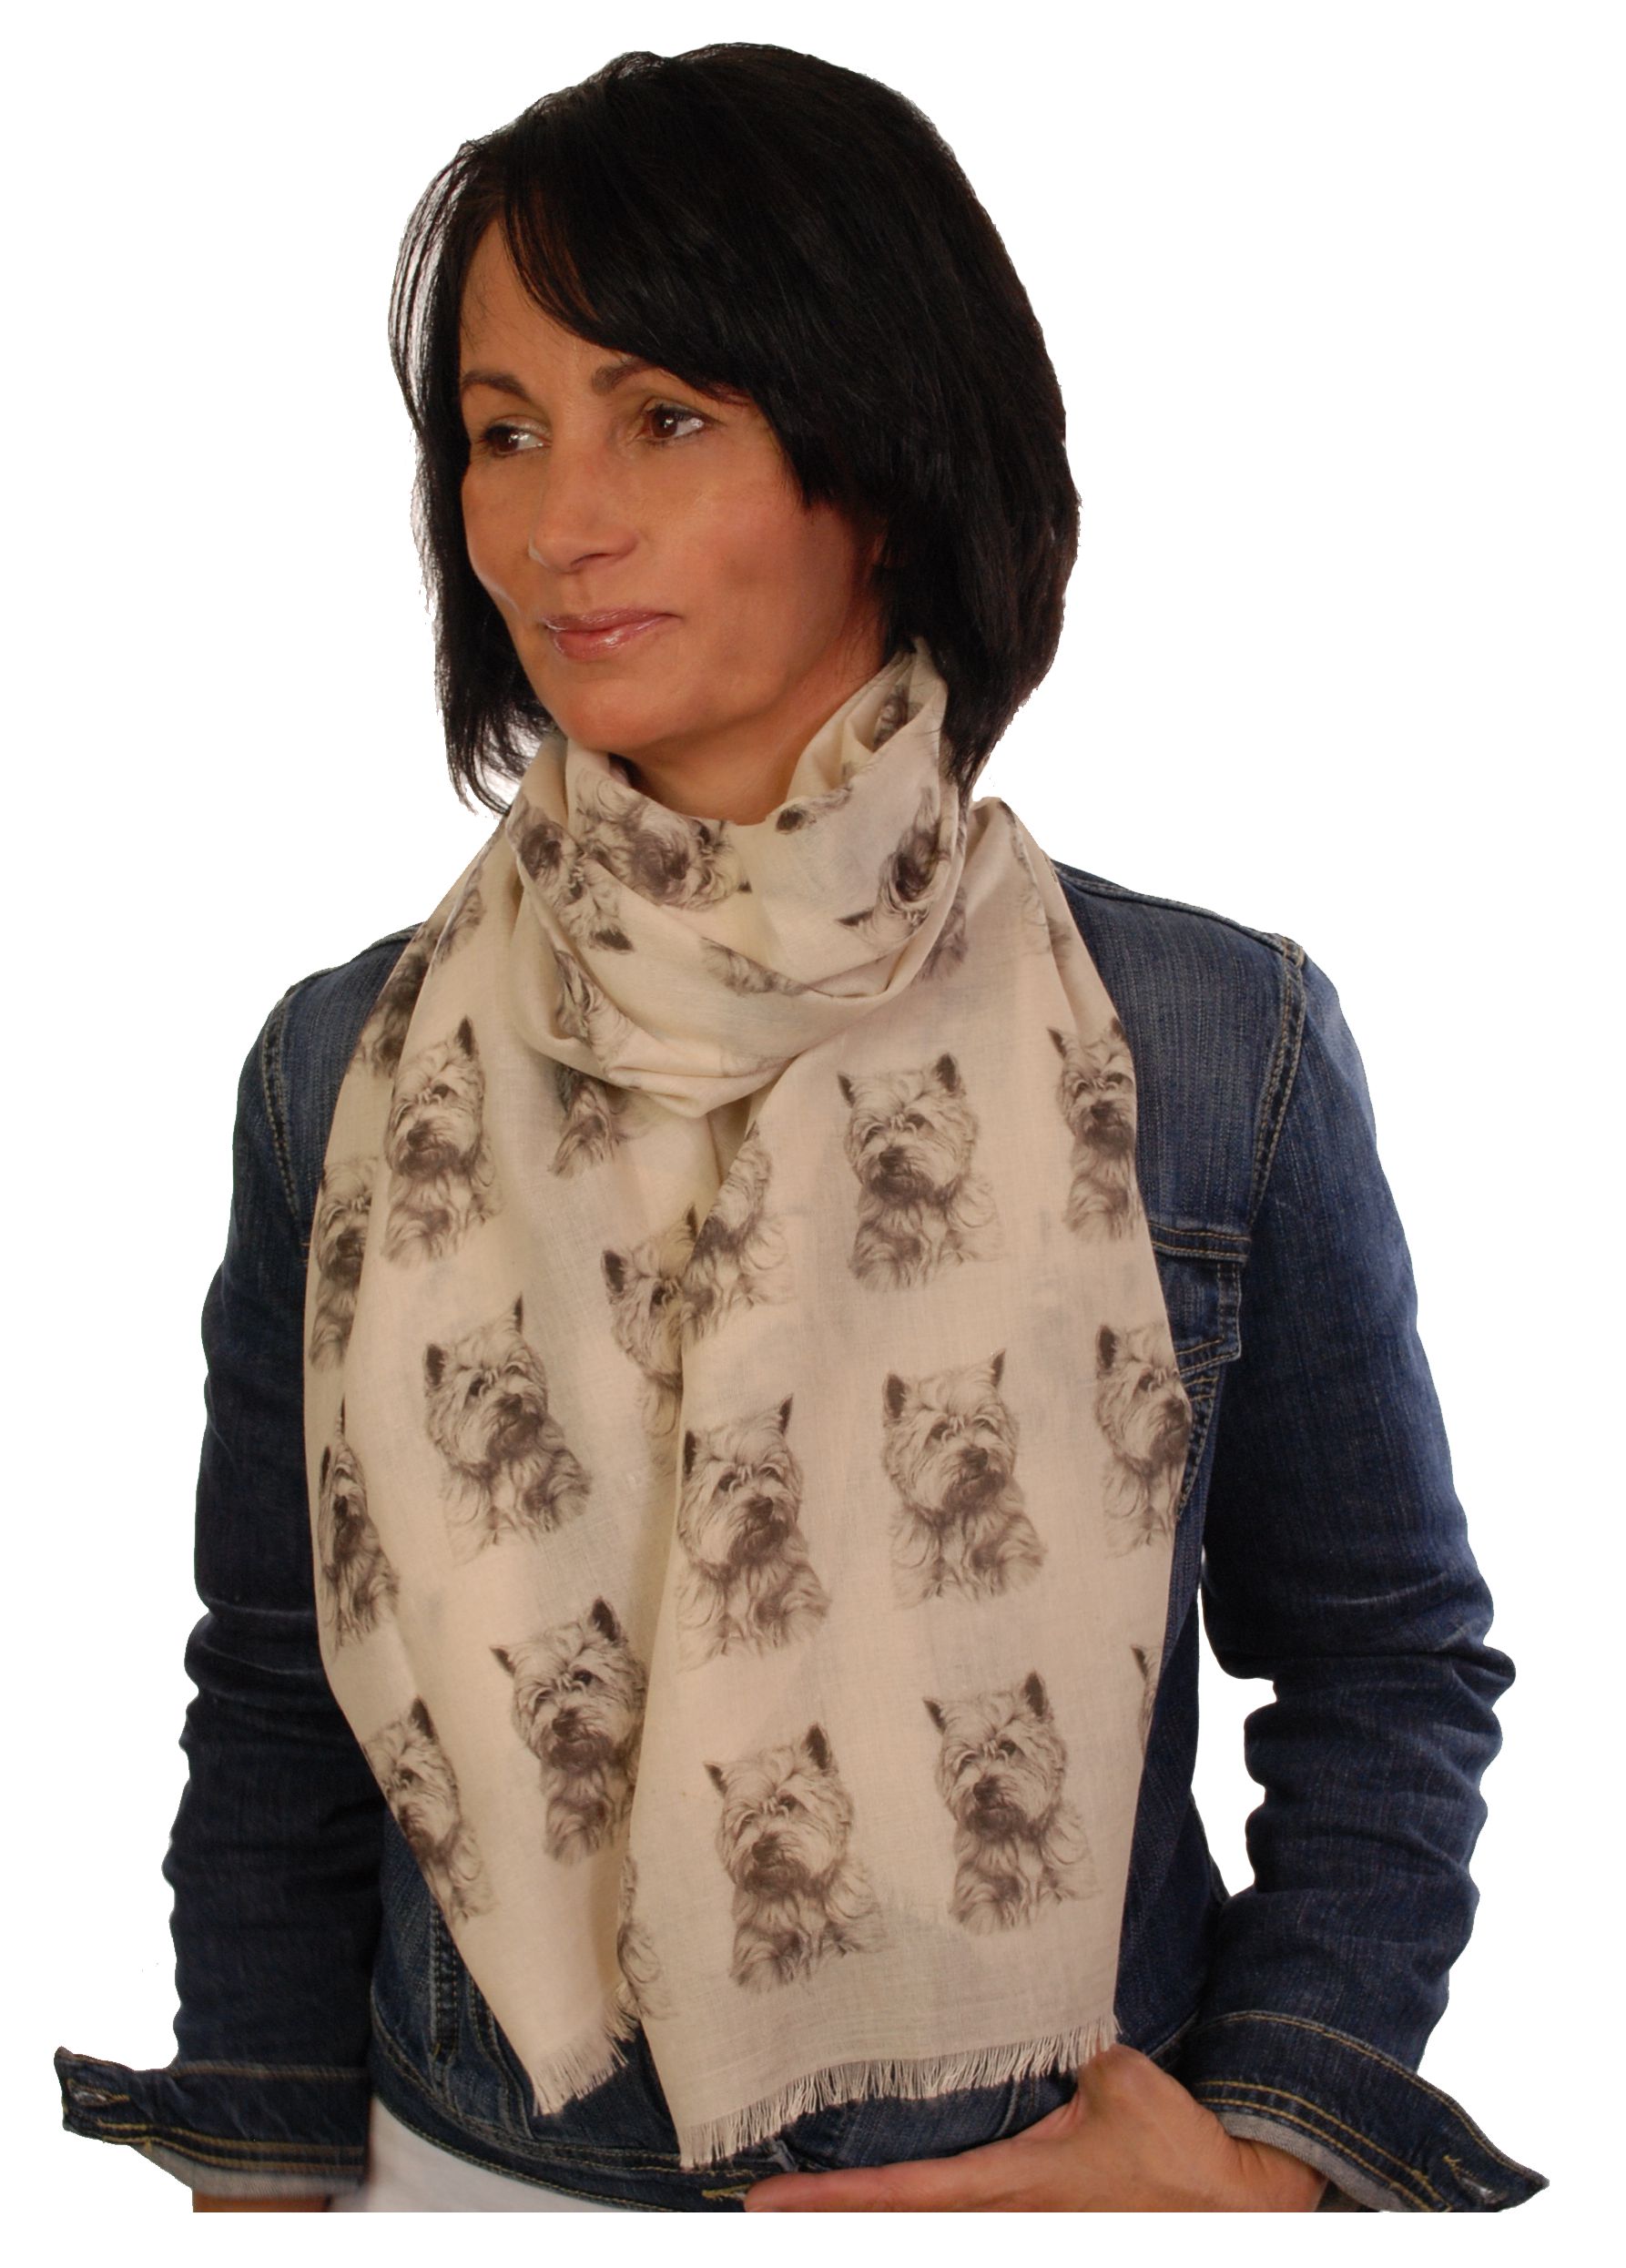 Mike Sibley Westie West Highland Terrier licensed design ladies fashion scarf